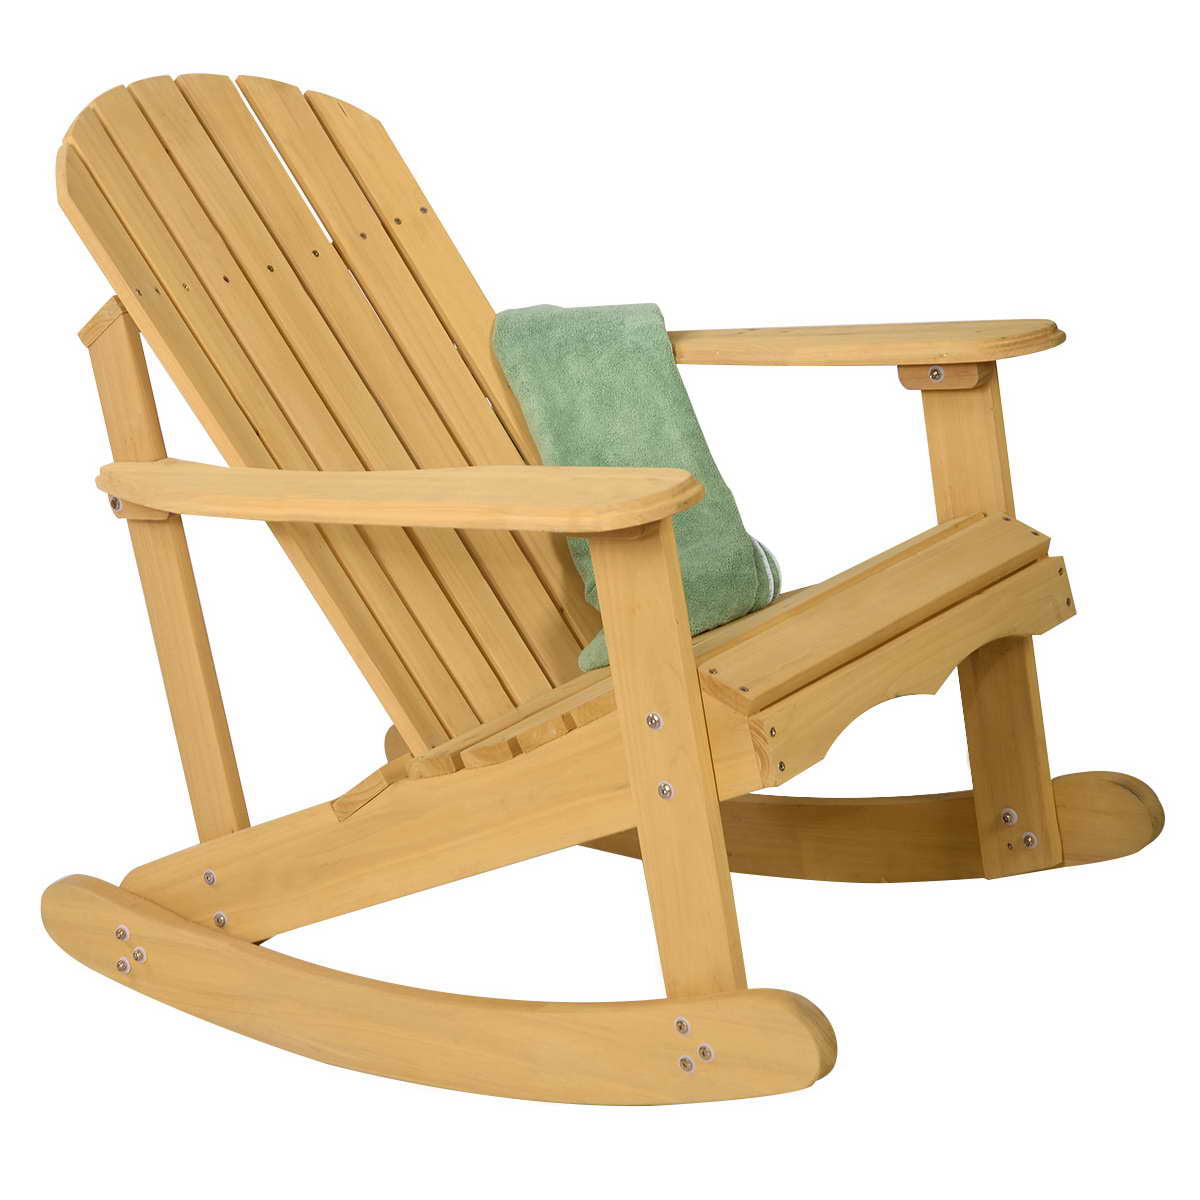 Topbuy Wood Adirondack Chair 330lbs Loading Porch Rocker